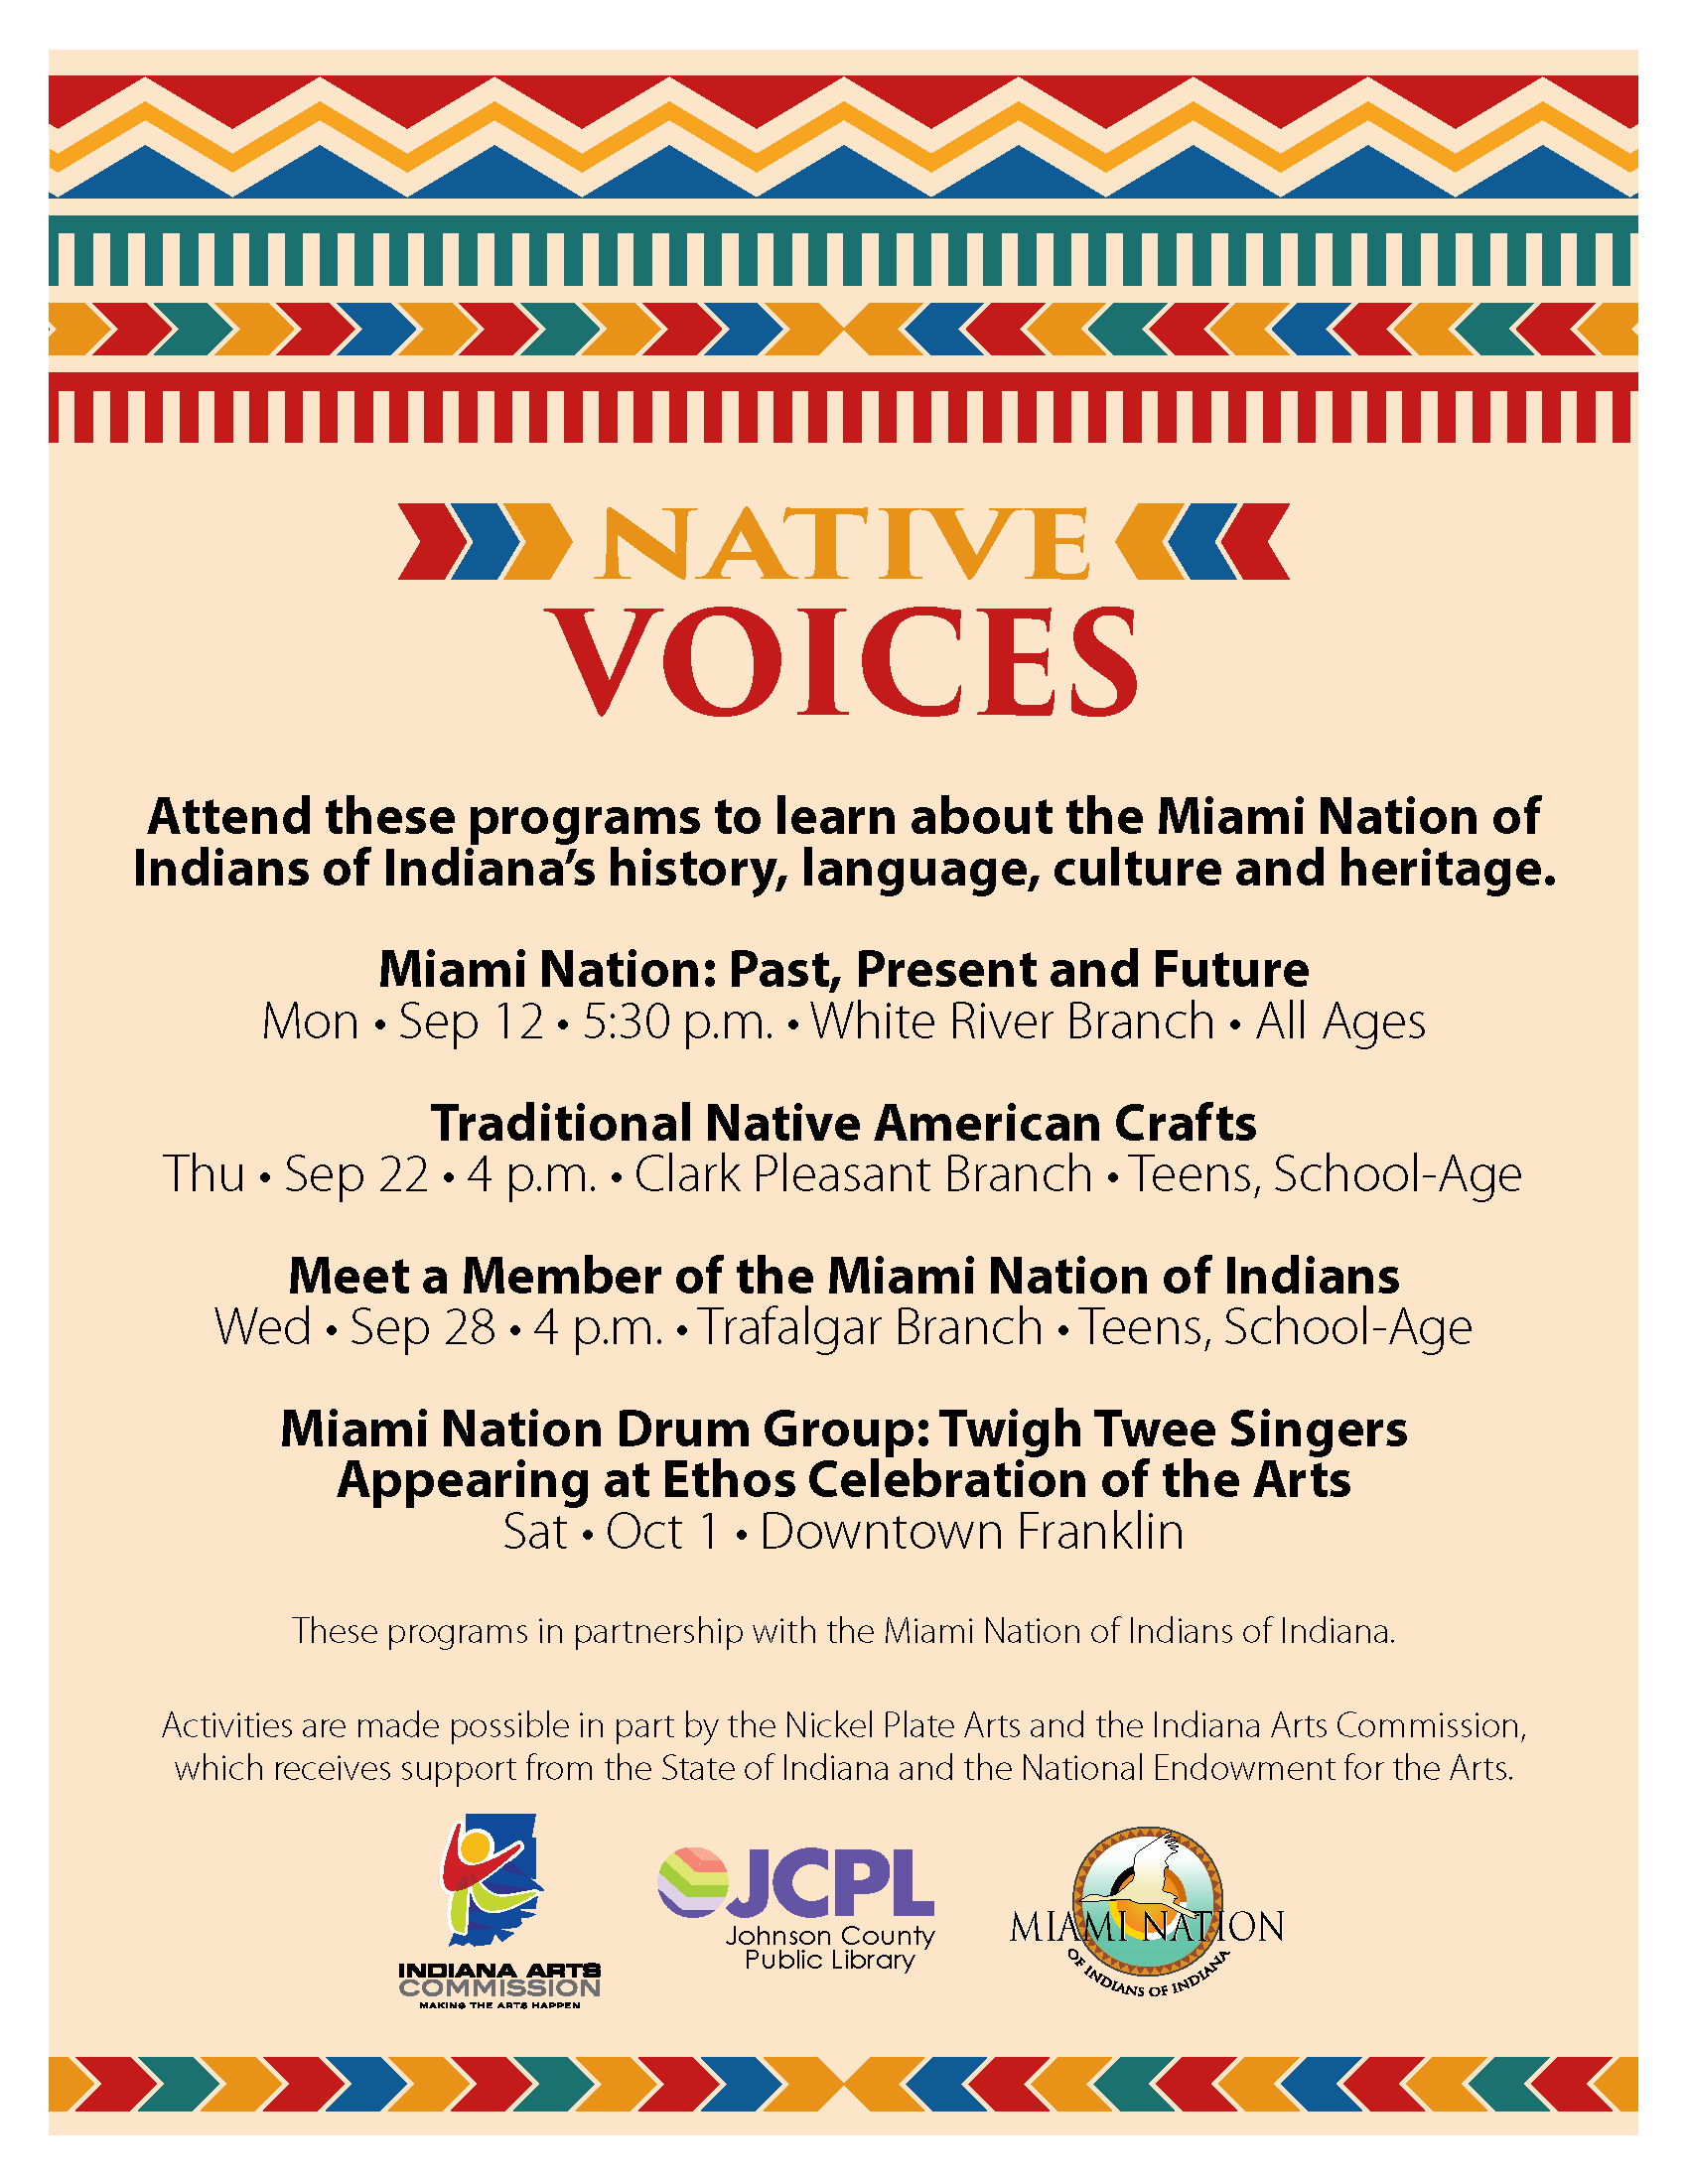 Native Voices programs